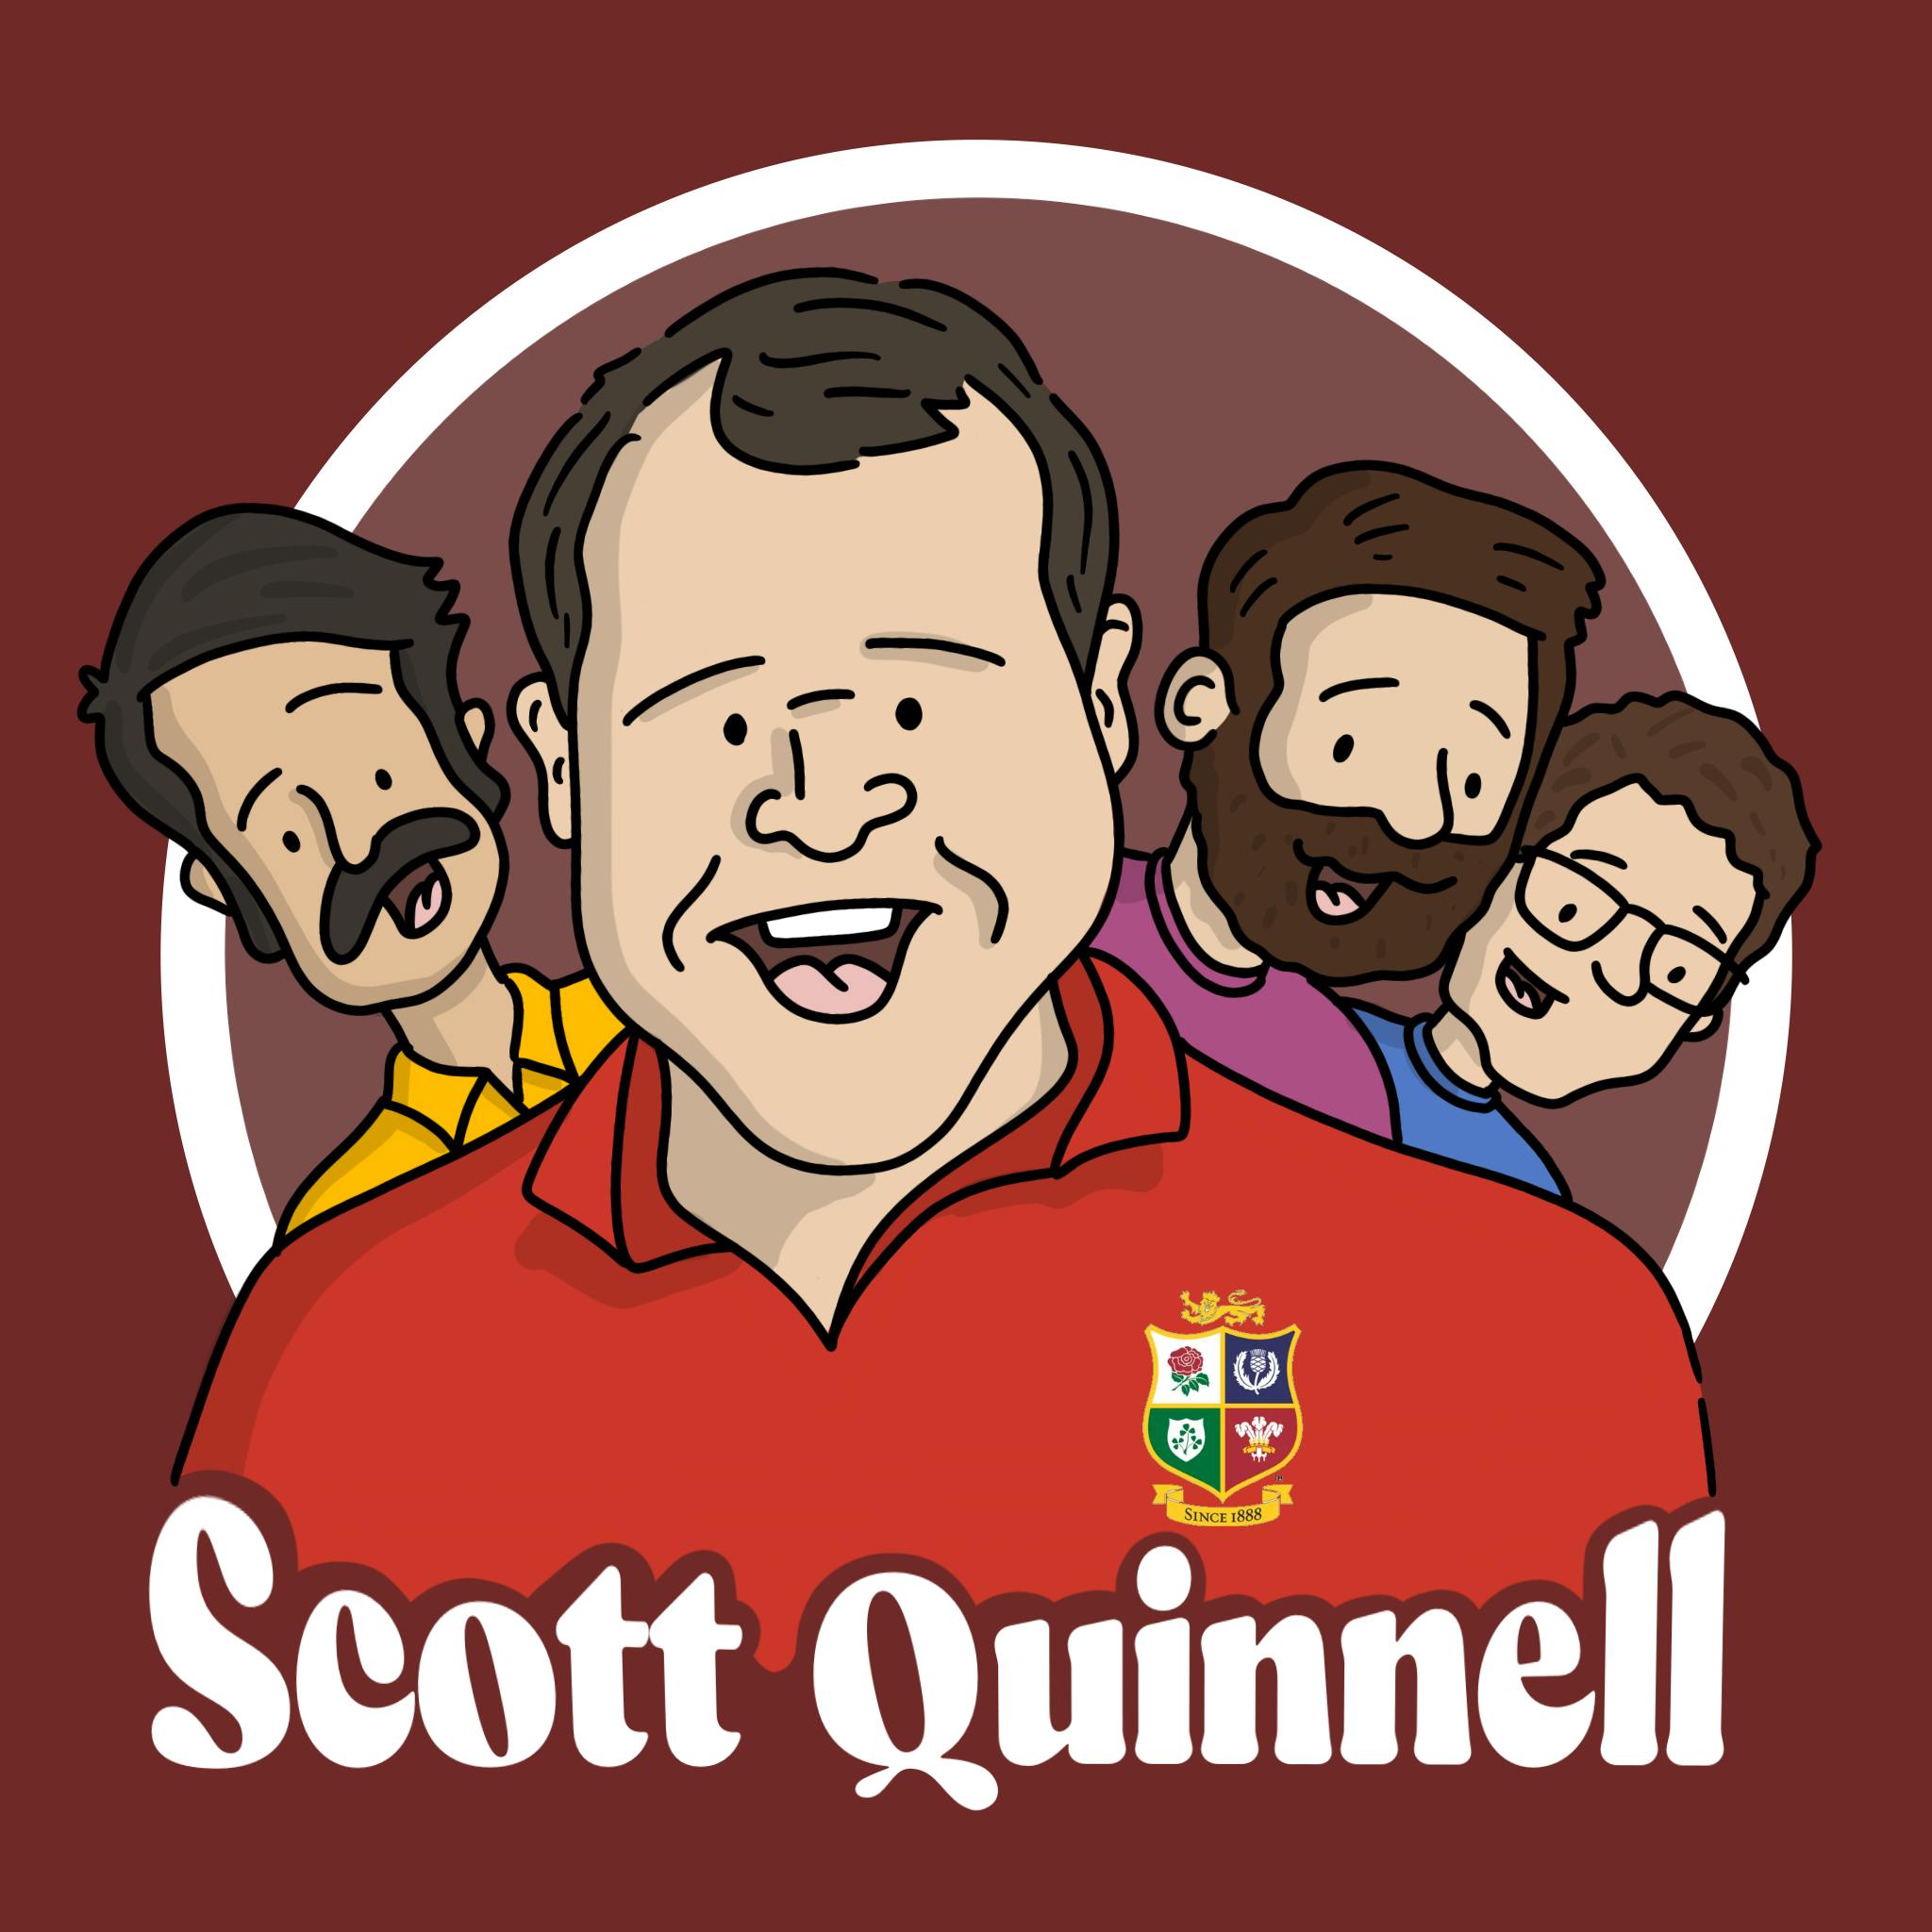 Episode 207, Part 1: Scott Quinnell